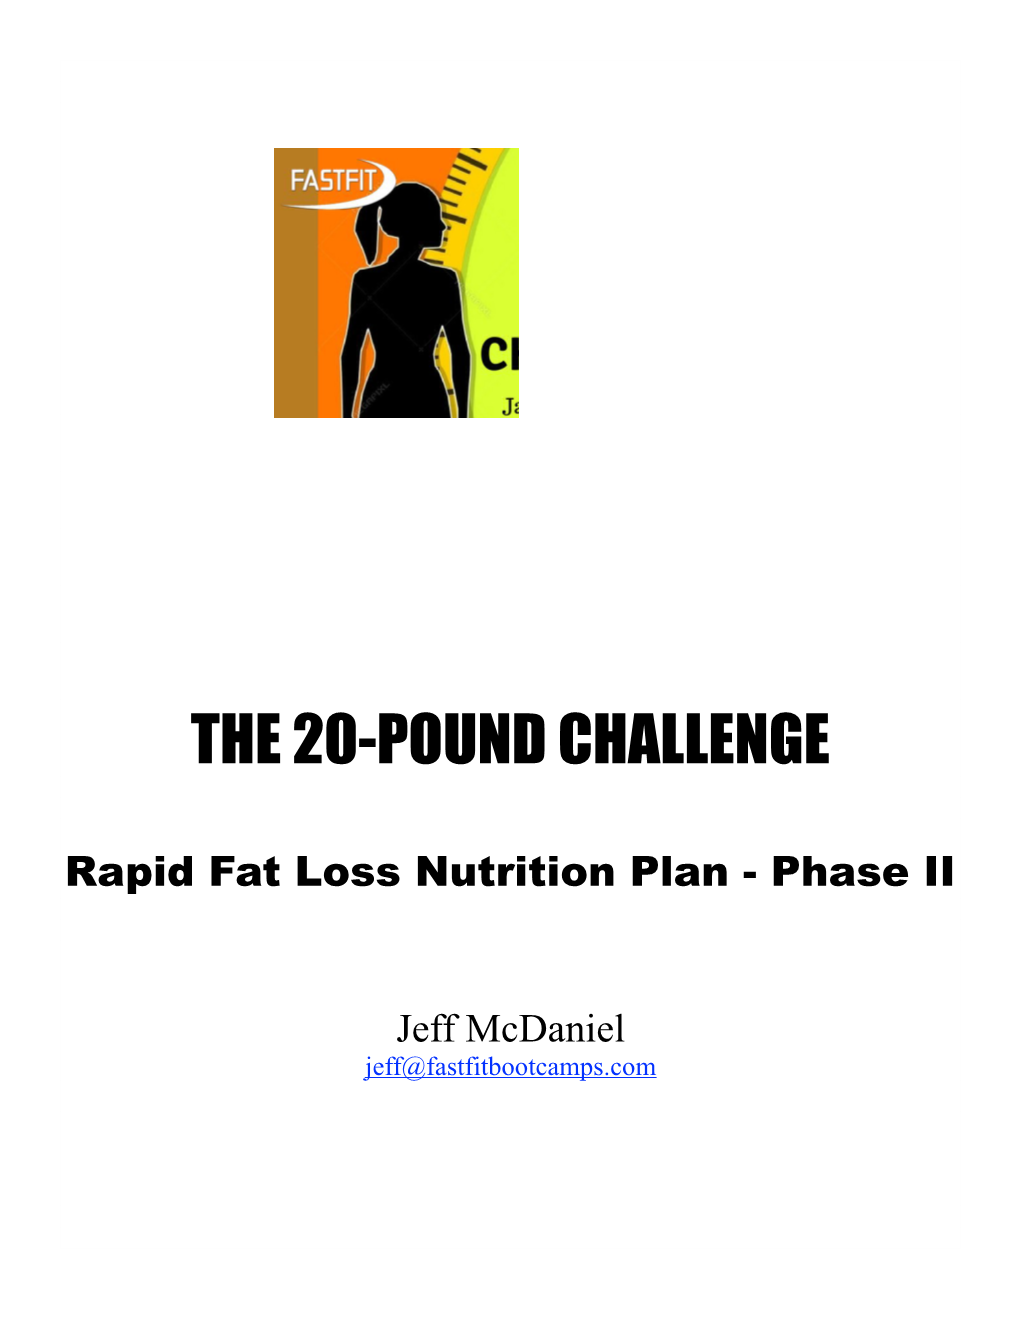 Rapid Fat Loss Nutrition Plan - Phase II